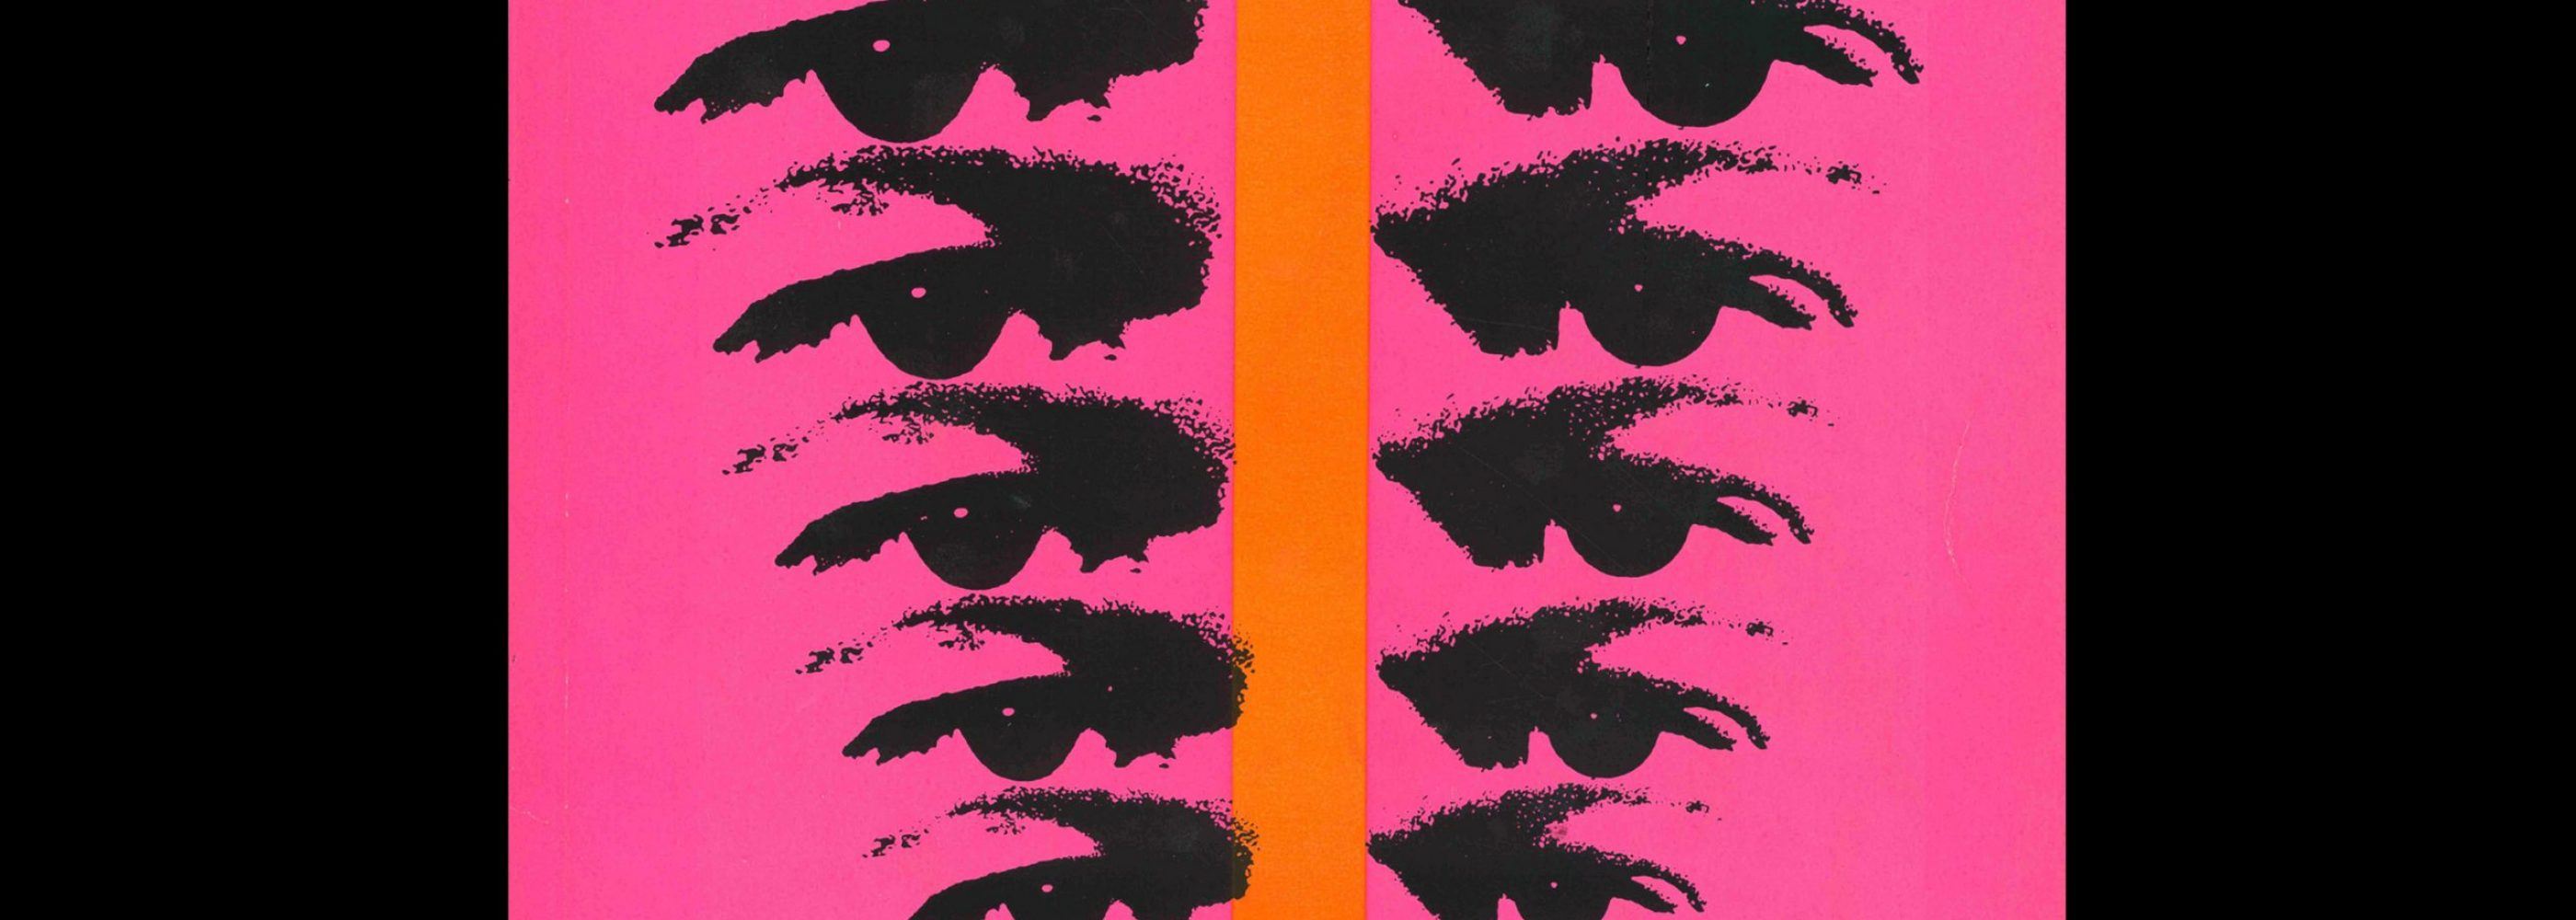 Gebrauchsgraphik, 8, 1969. Cover design by Roman Cieslewicz